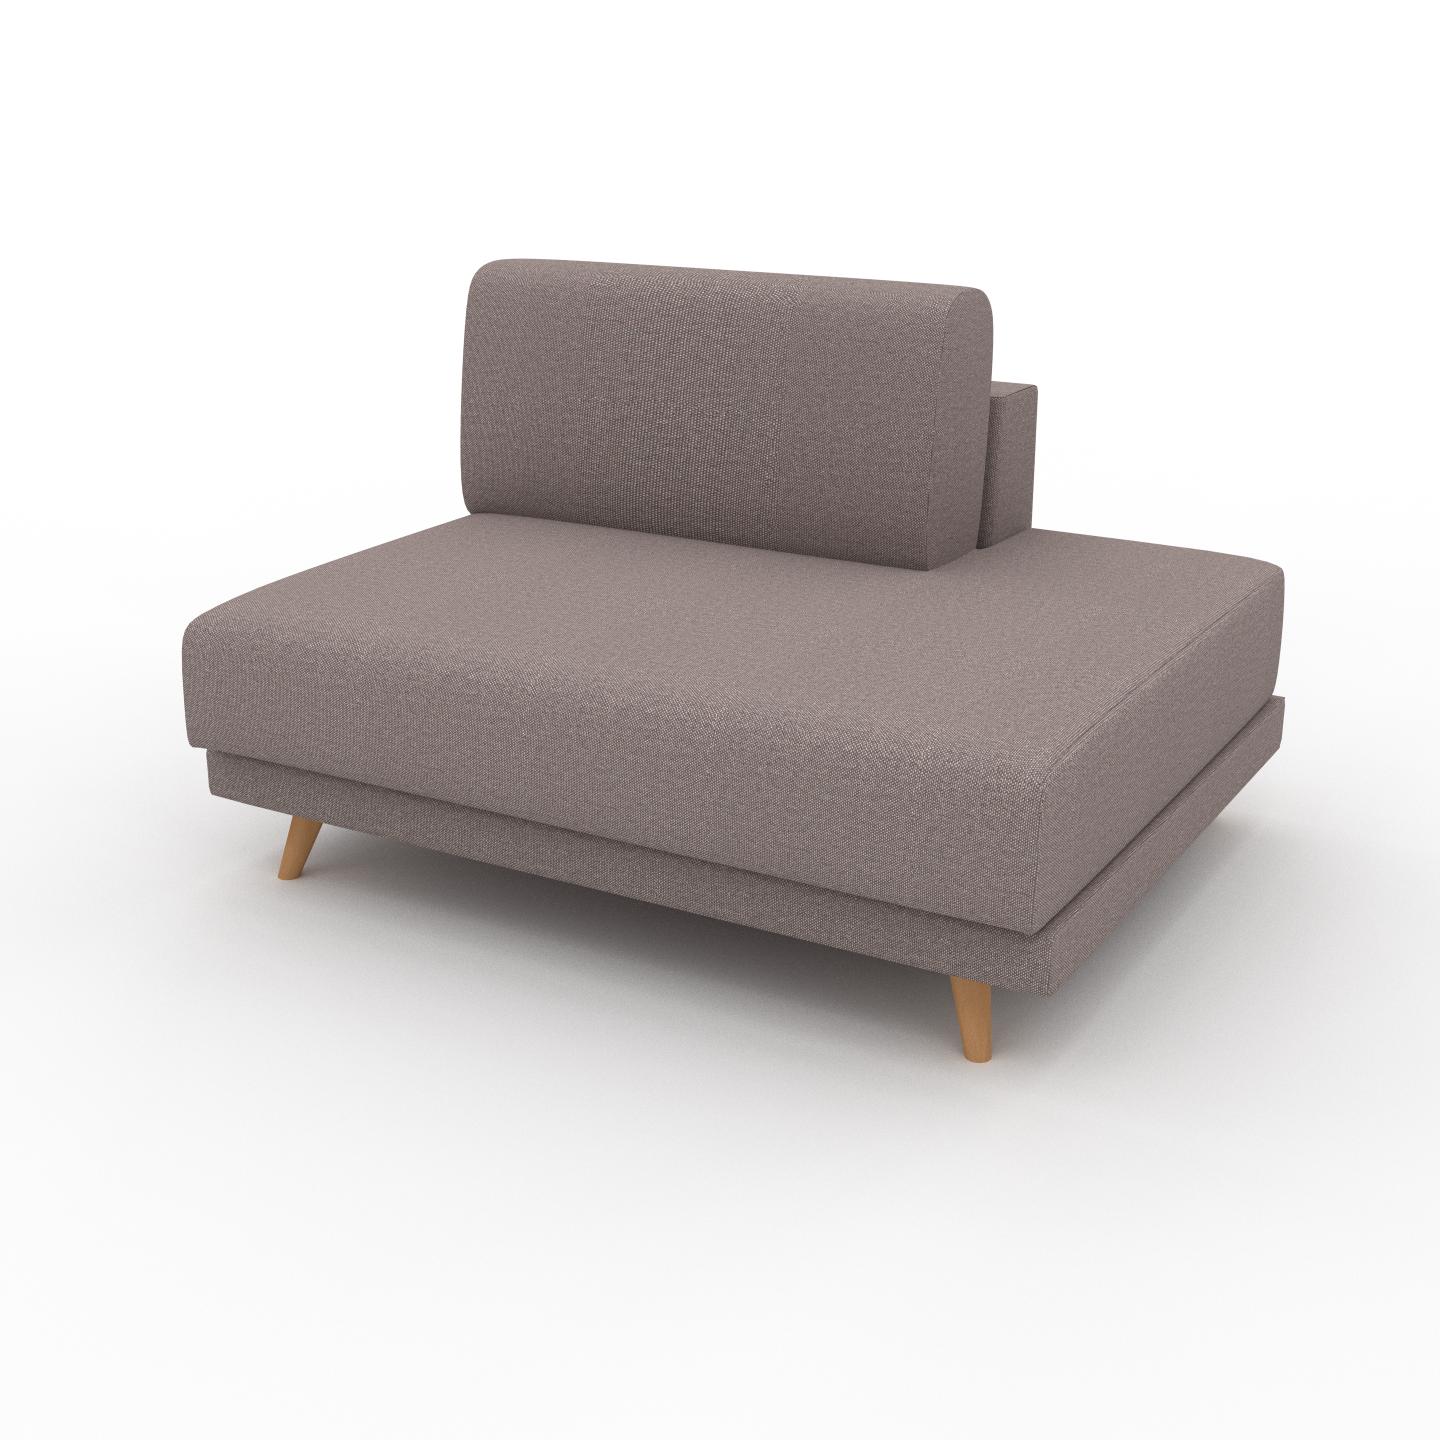 MYCS Sessel Taupegrau - Eleganter Sessel: Hochwertige Qualität, einzigartiges Design - 120 x 75 x 98 cm, Individuell konfigurierbar